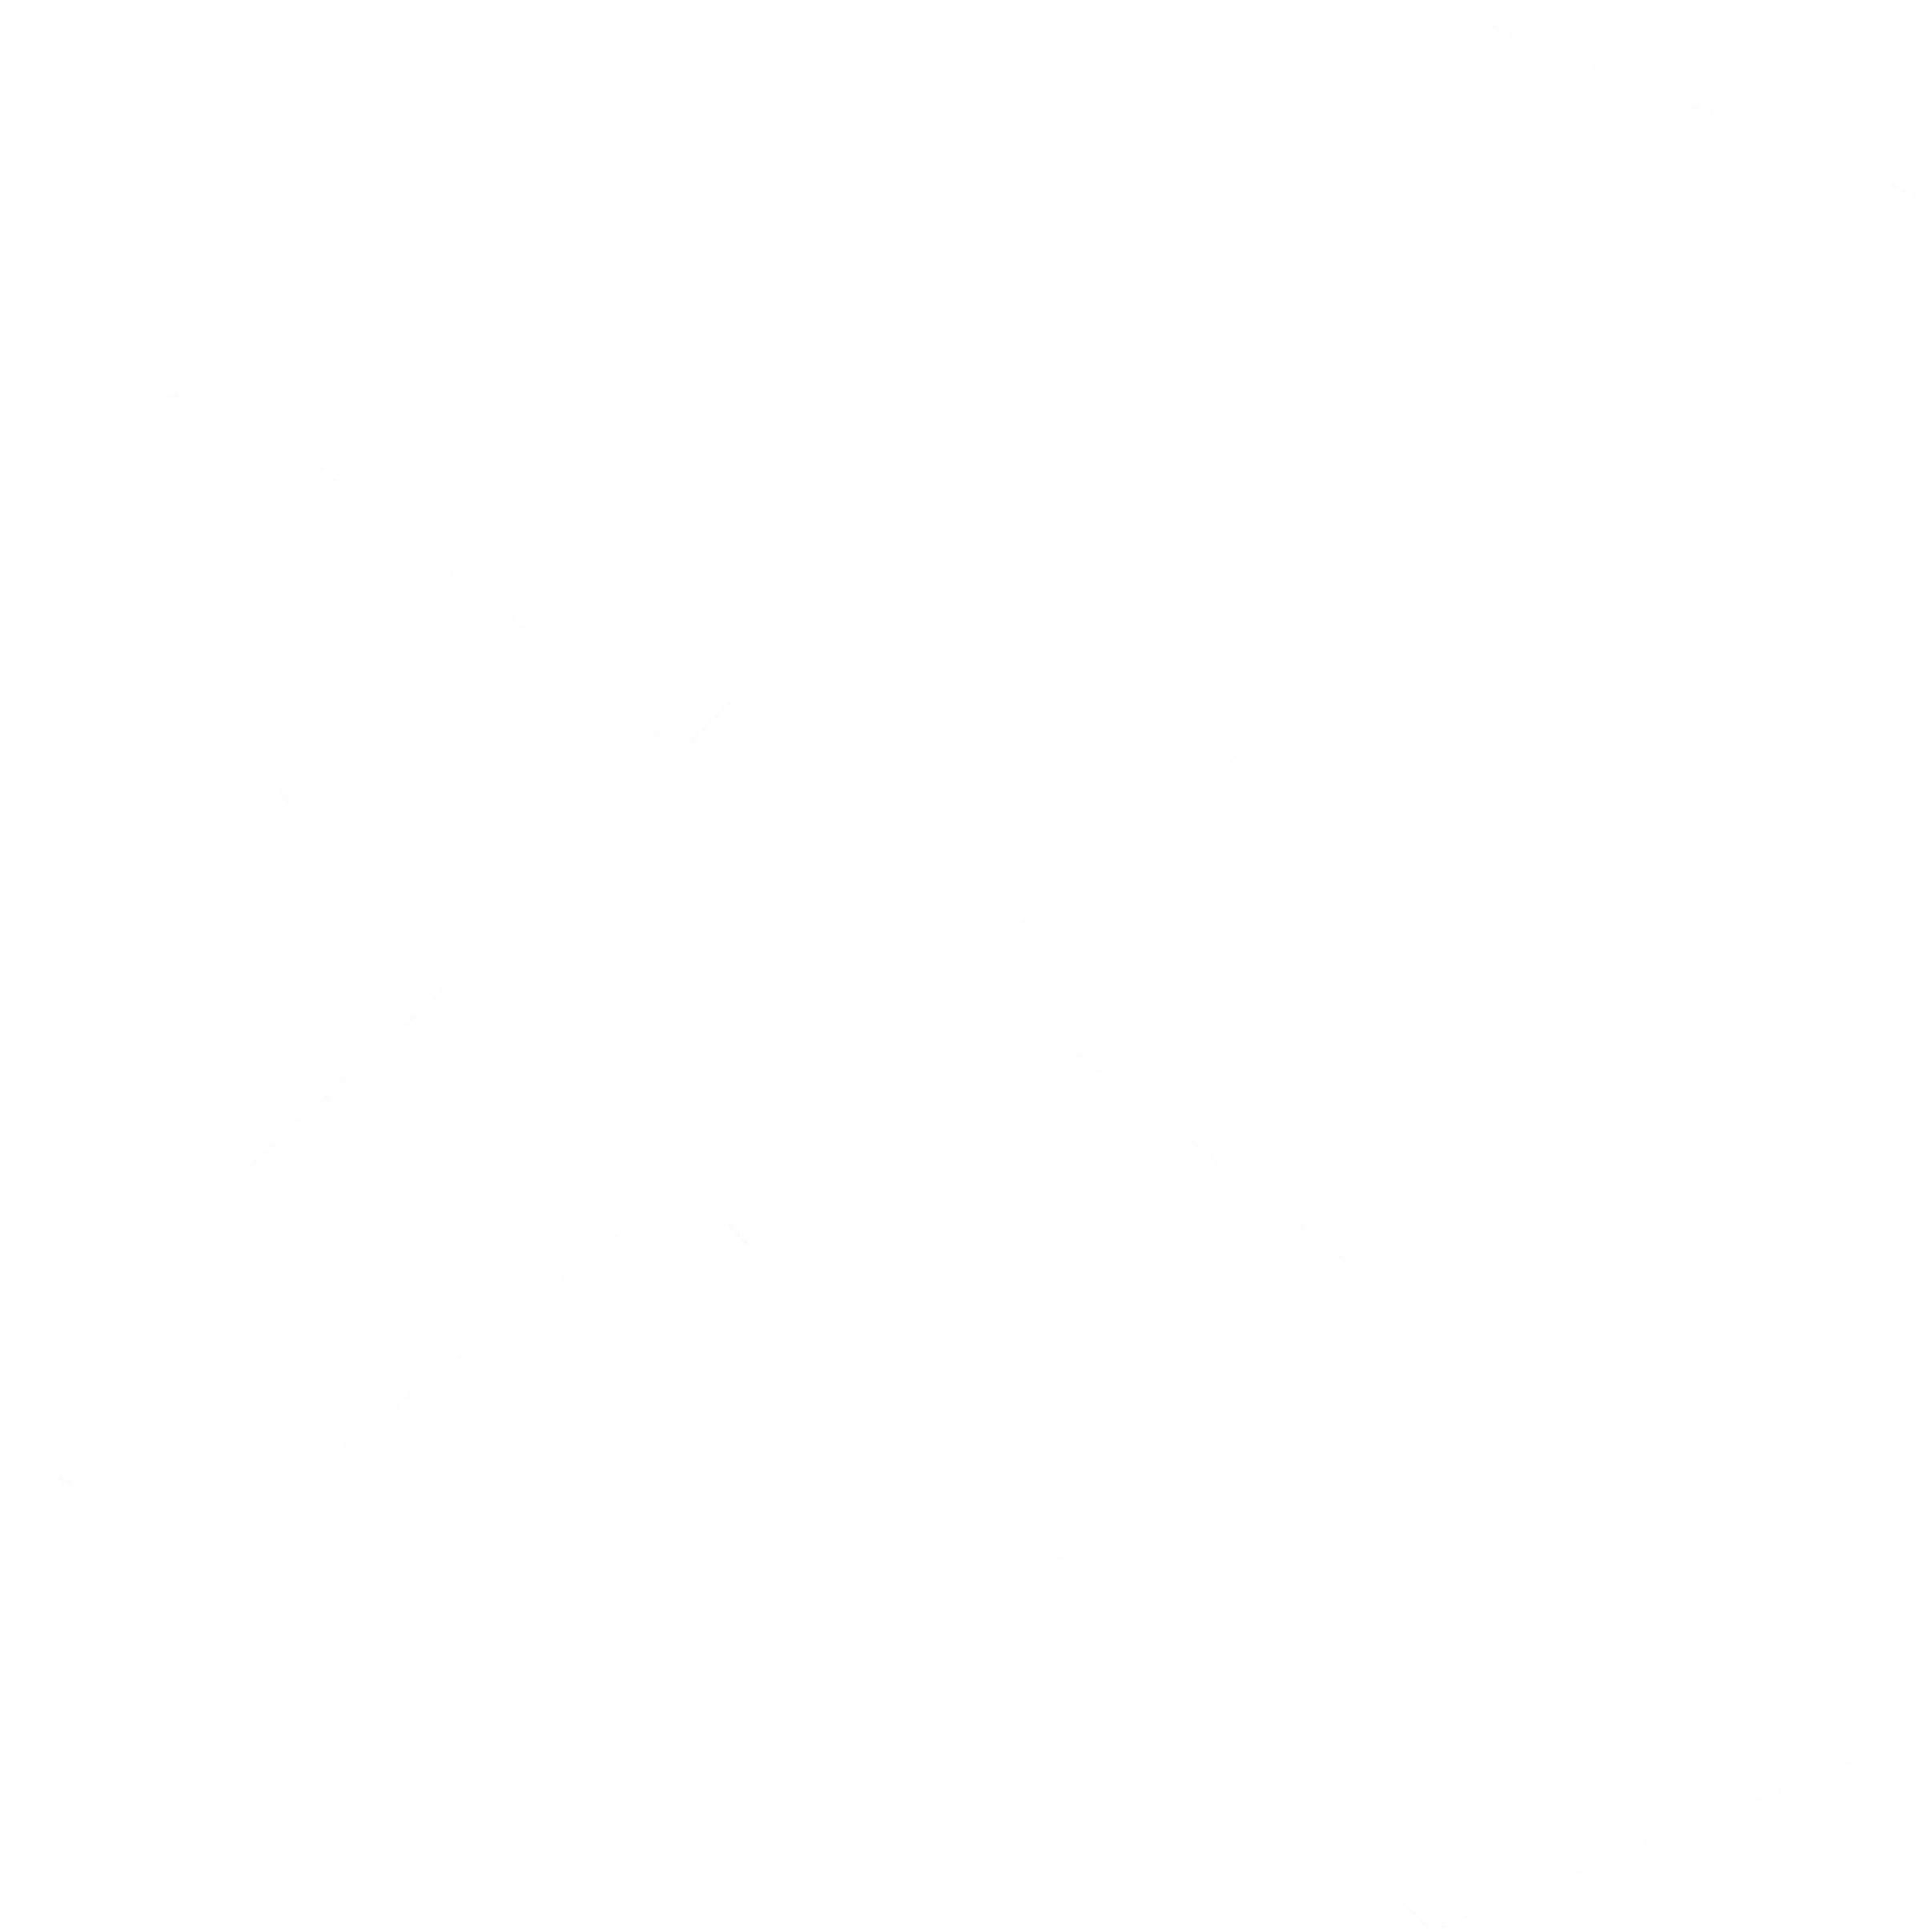 visual-studio-code-logo-black-and-white.webp